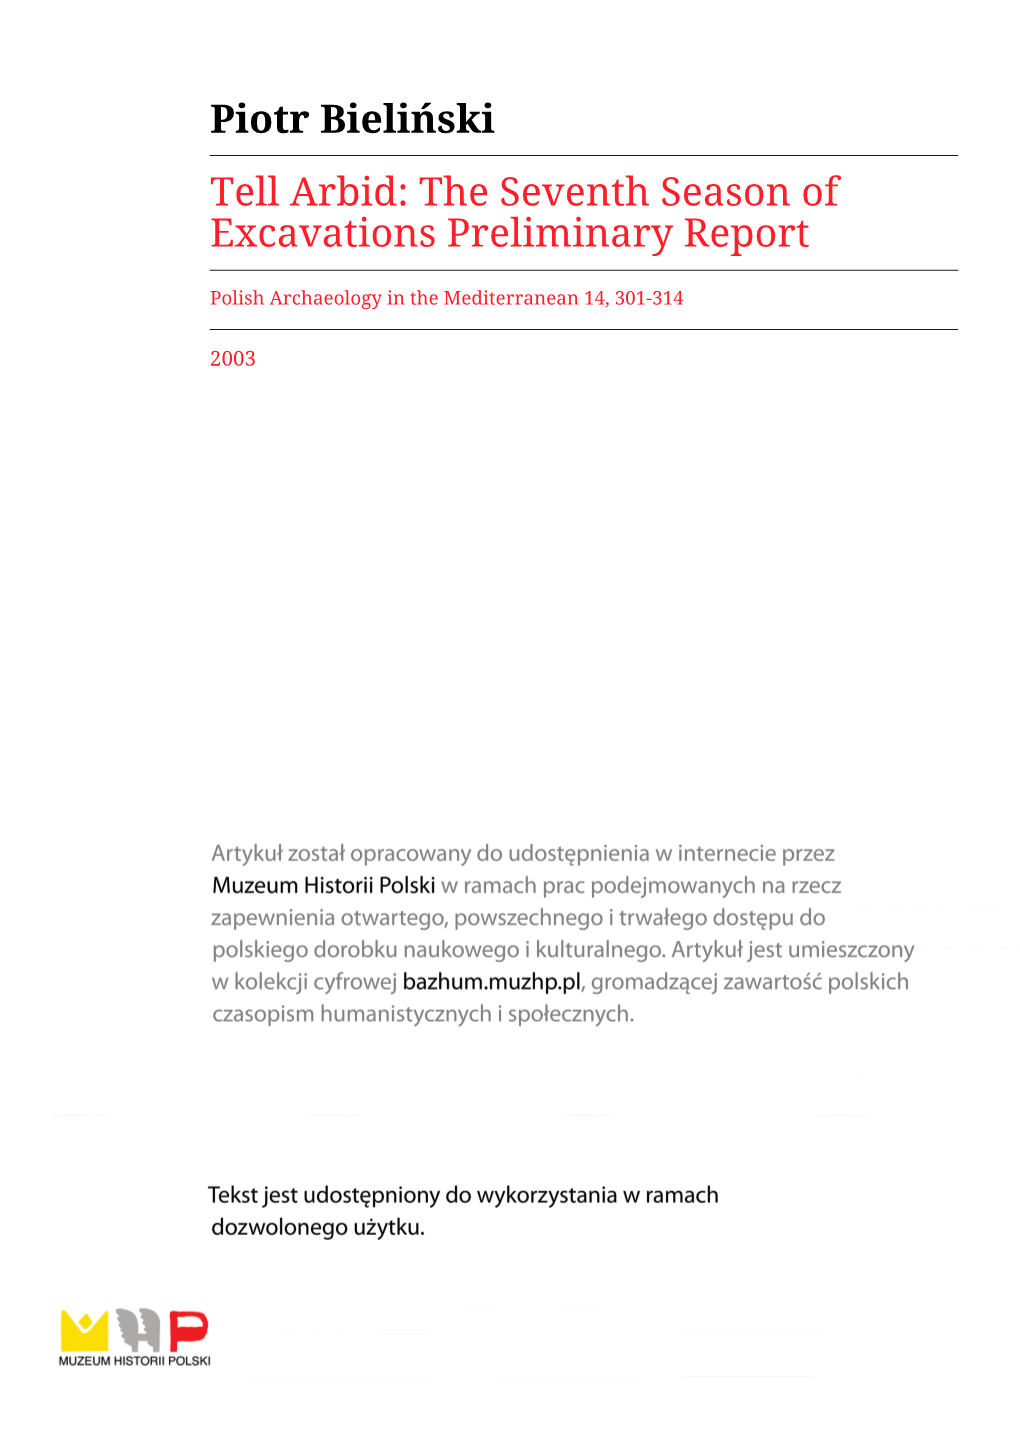 Piotr Bieliński Tell Arbid: the Seventh Season of Excavations Preliminary Report